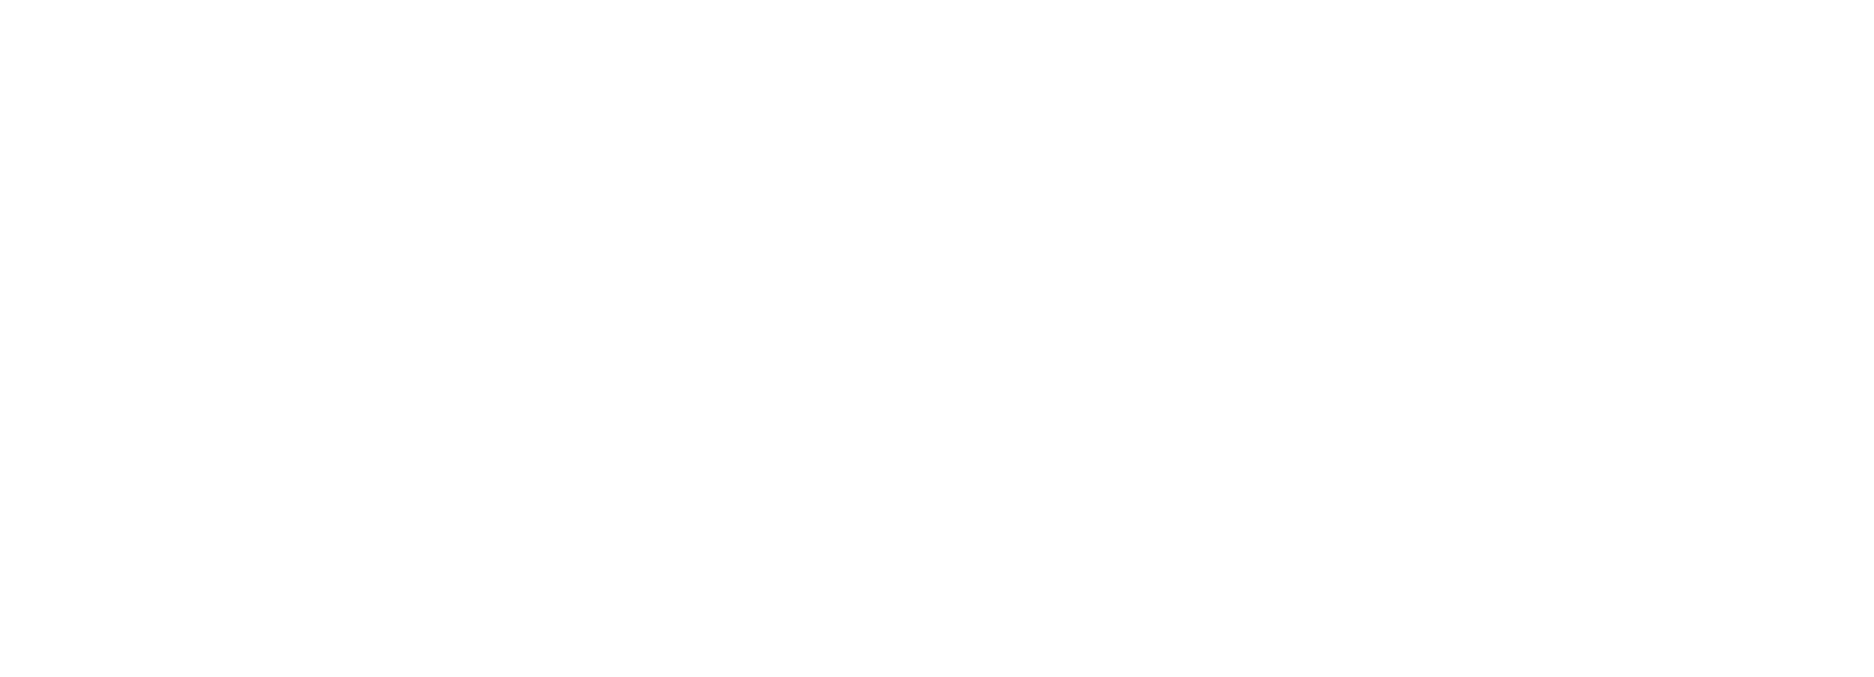 BASF pb